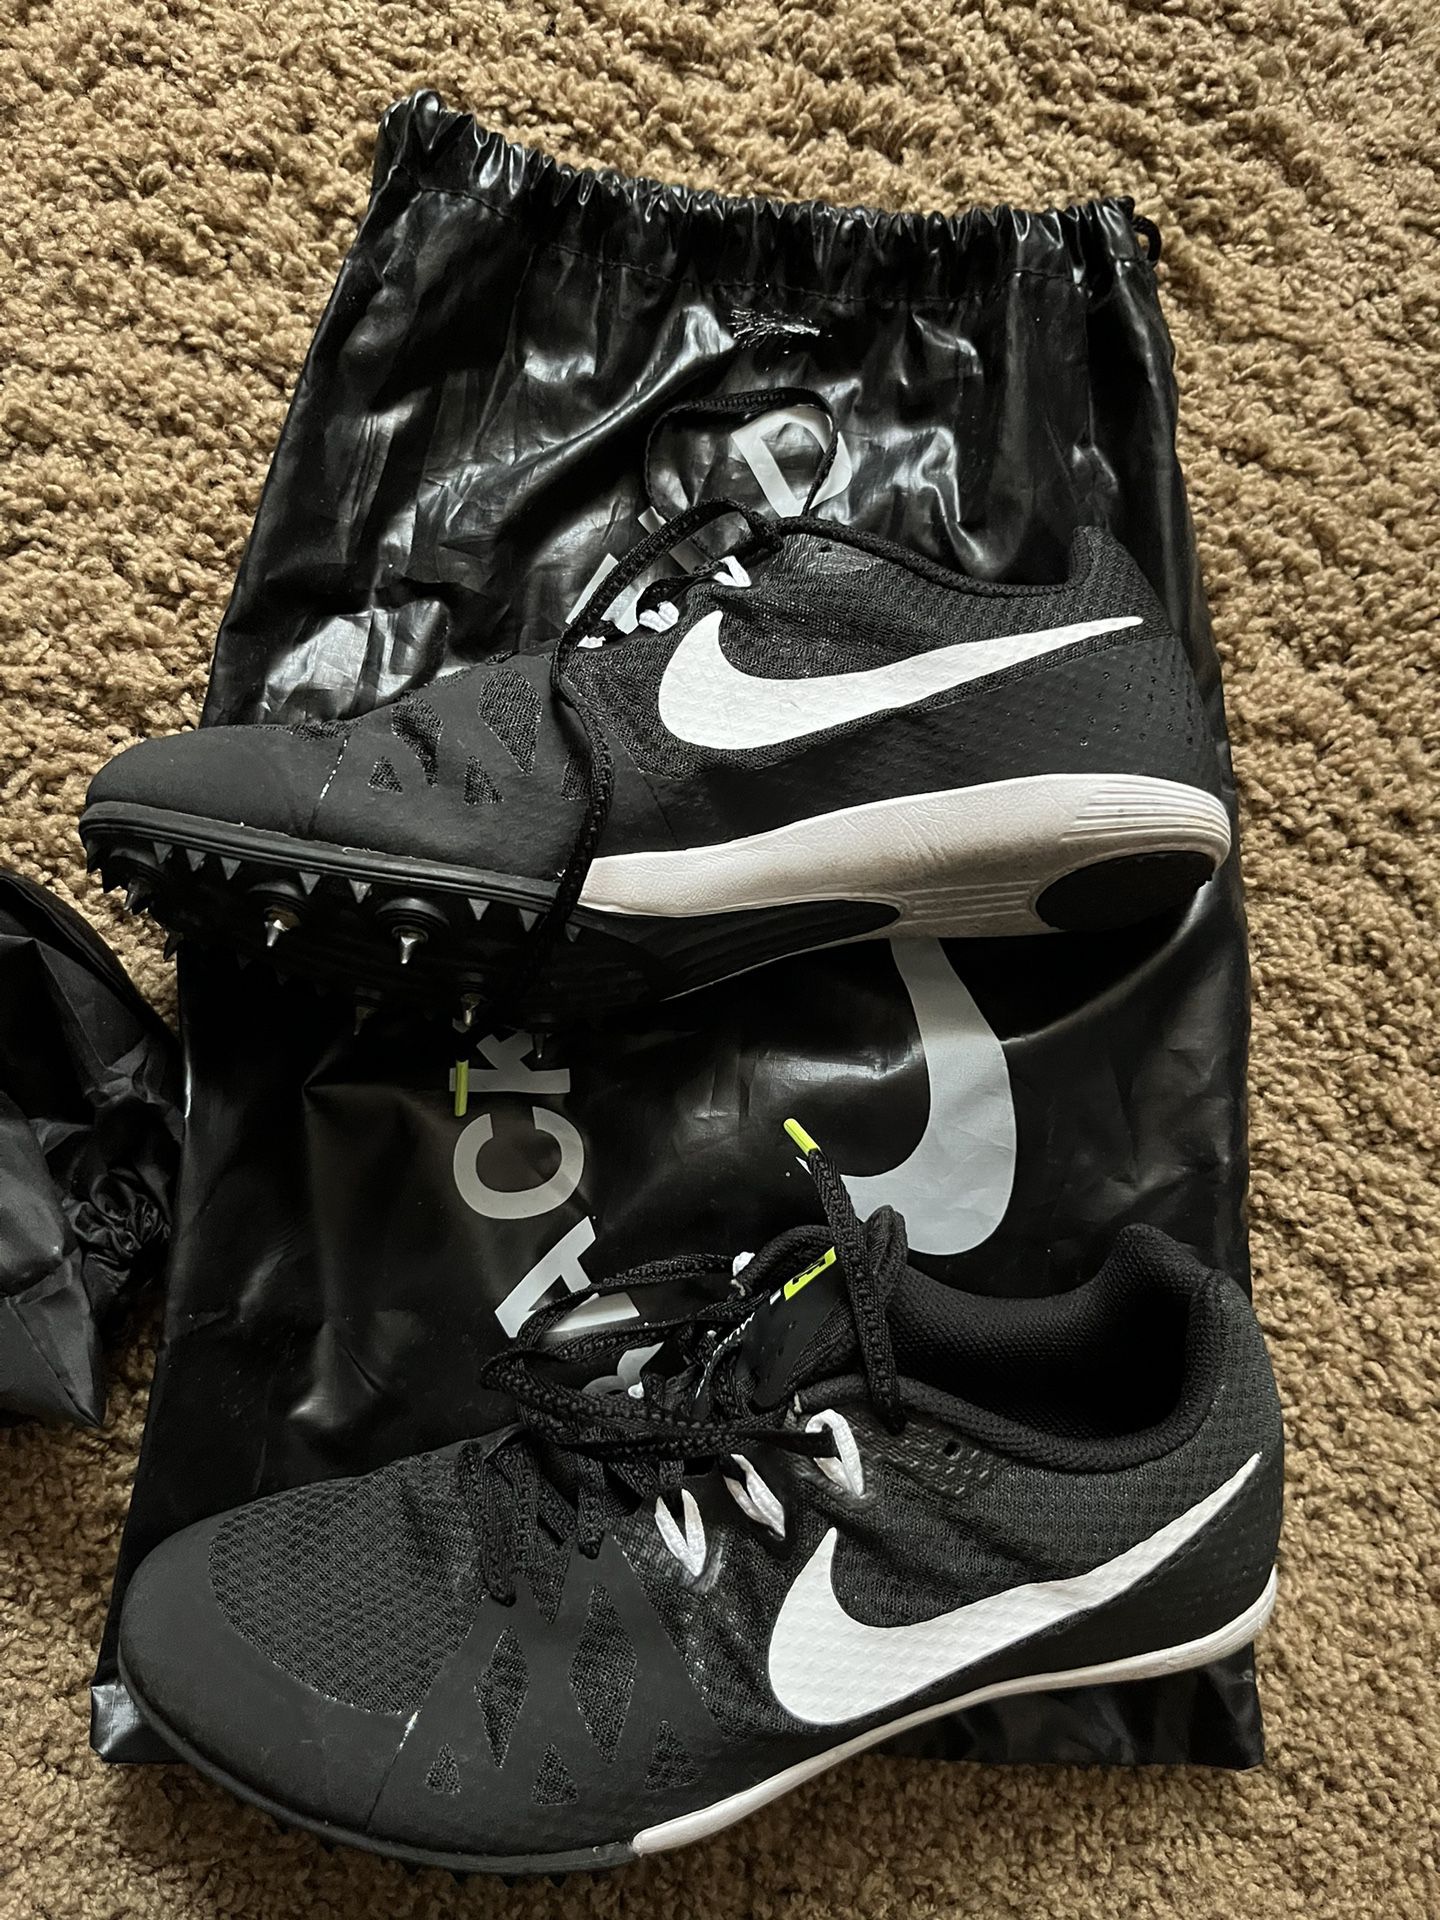 Black Nike track shoes